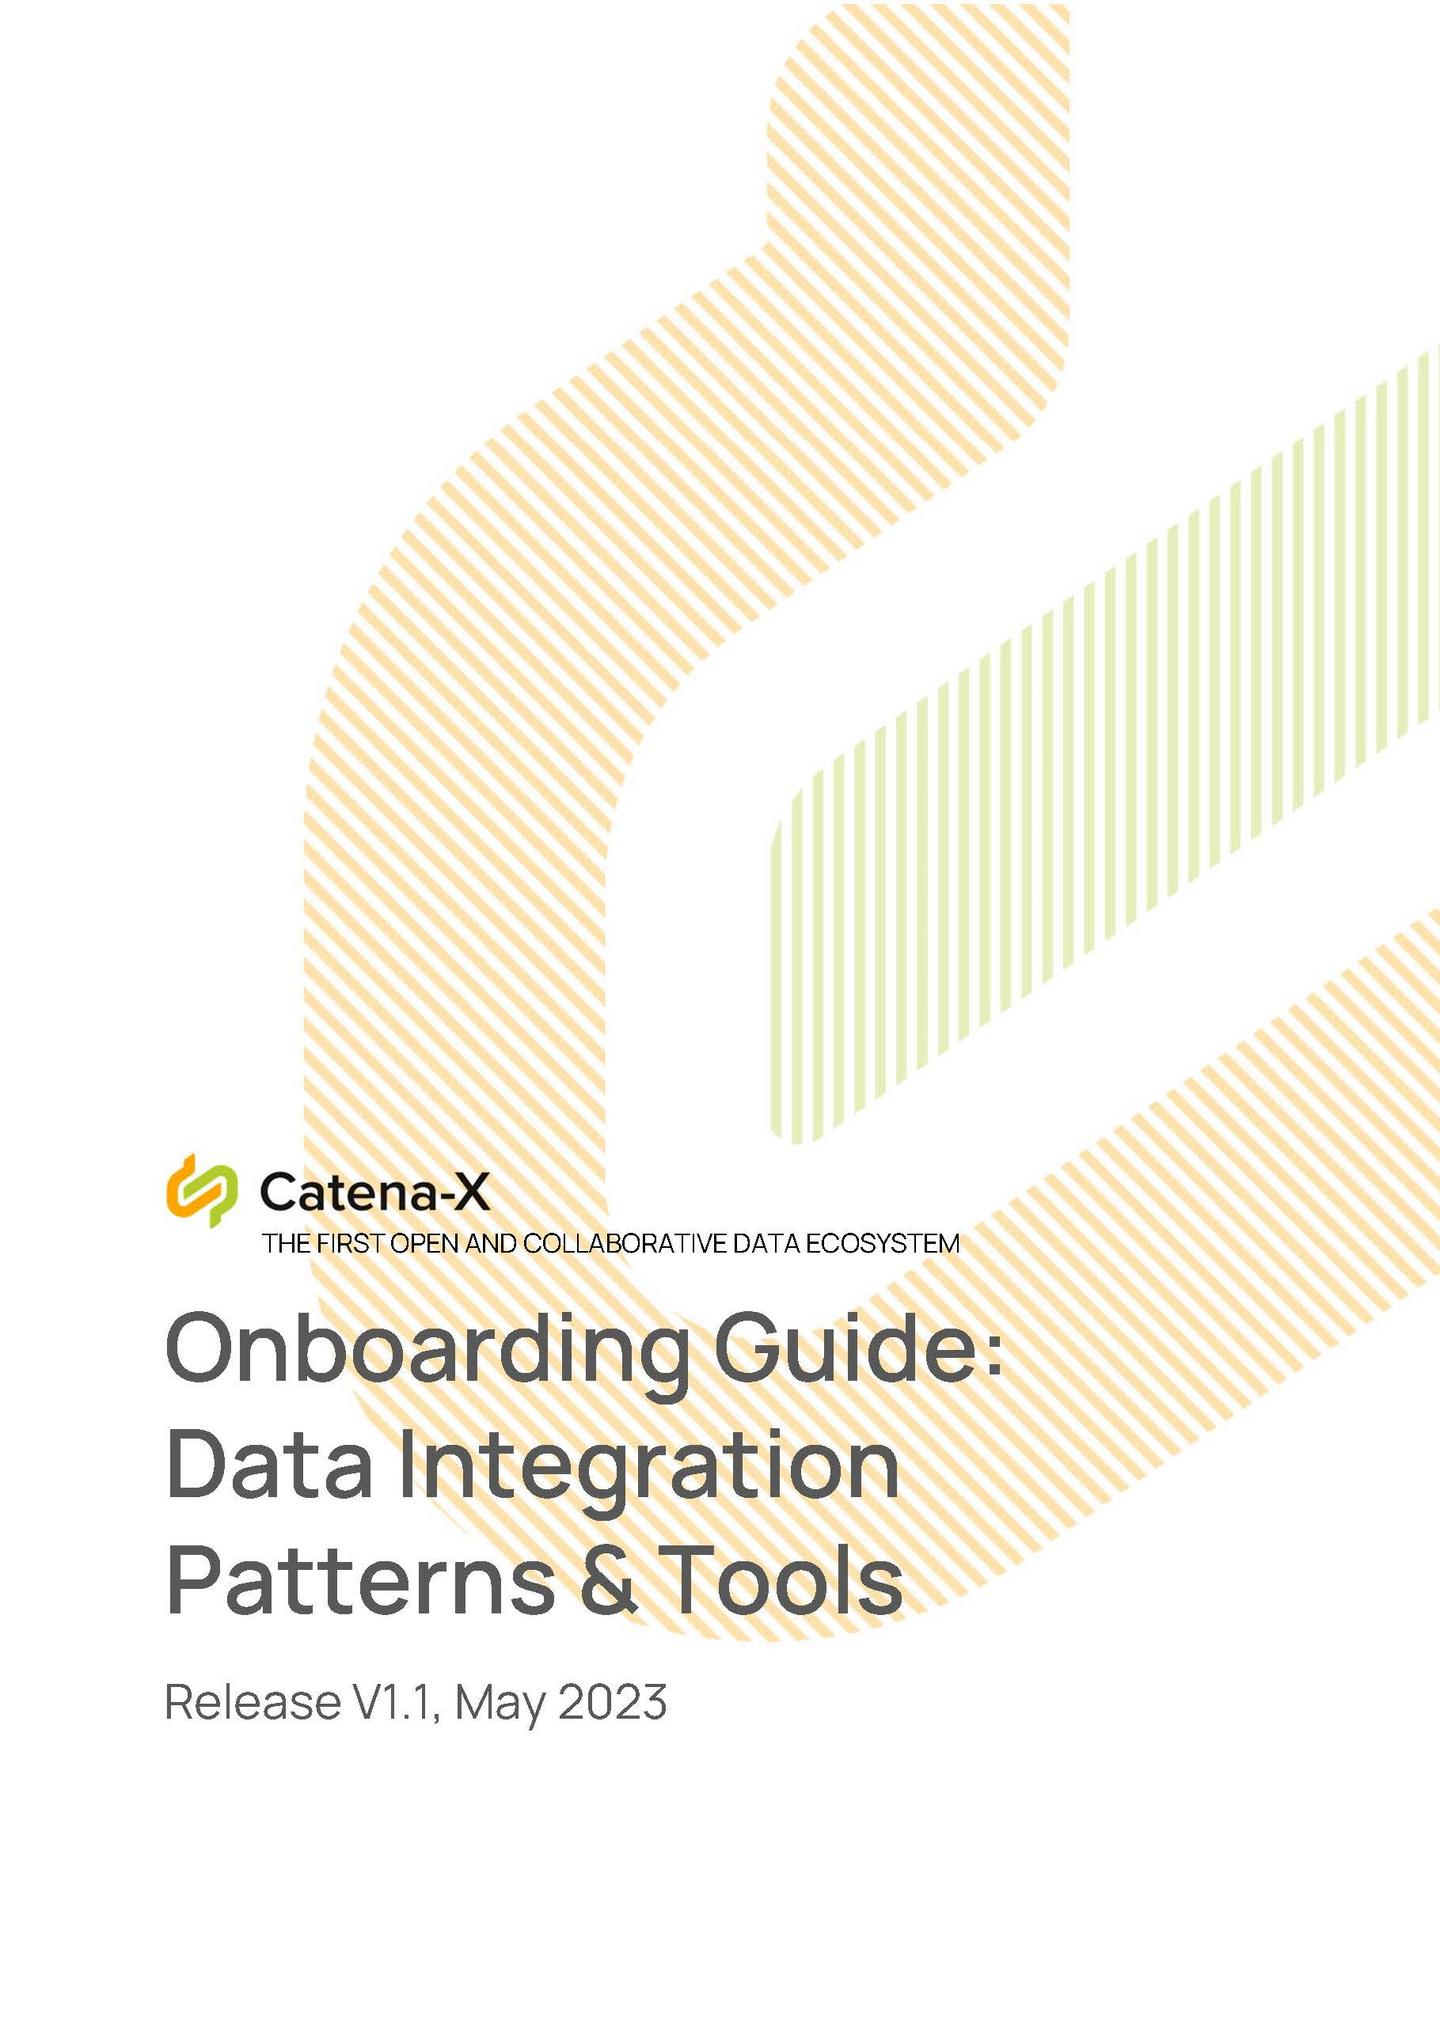 Data Integration Patterns Guide